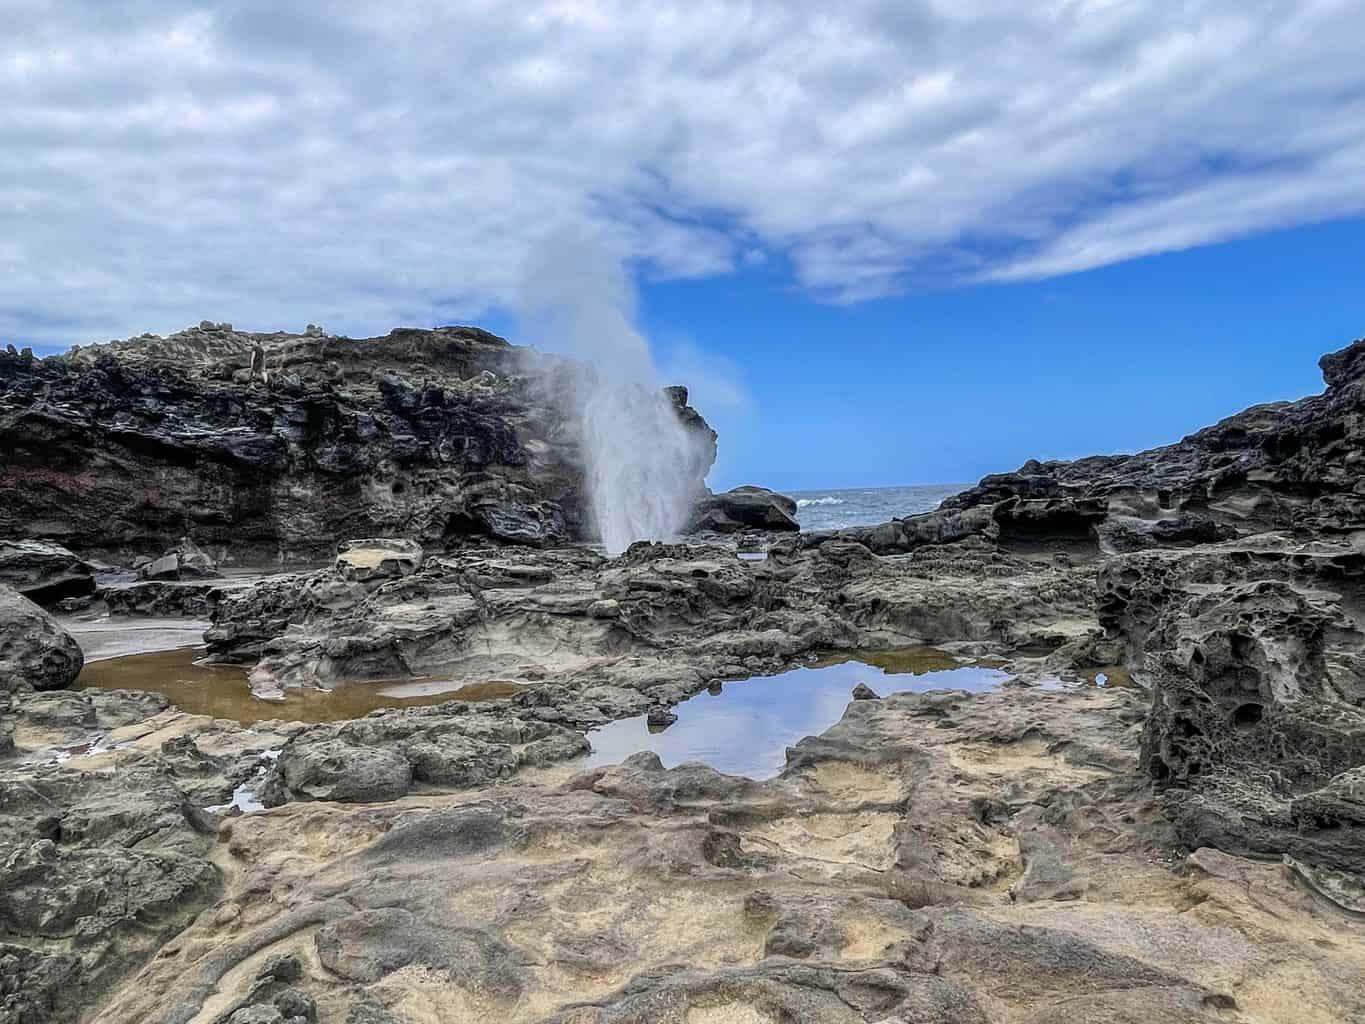 Maui Blowhole